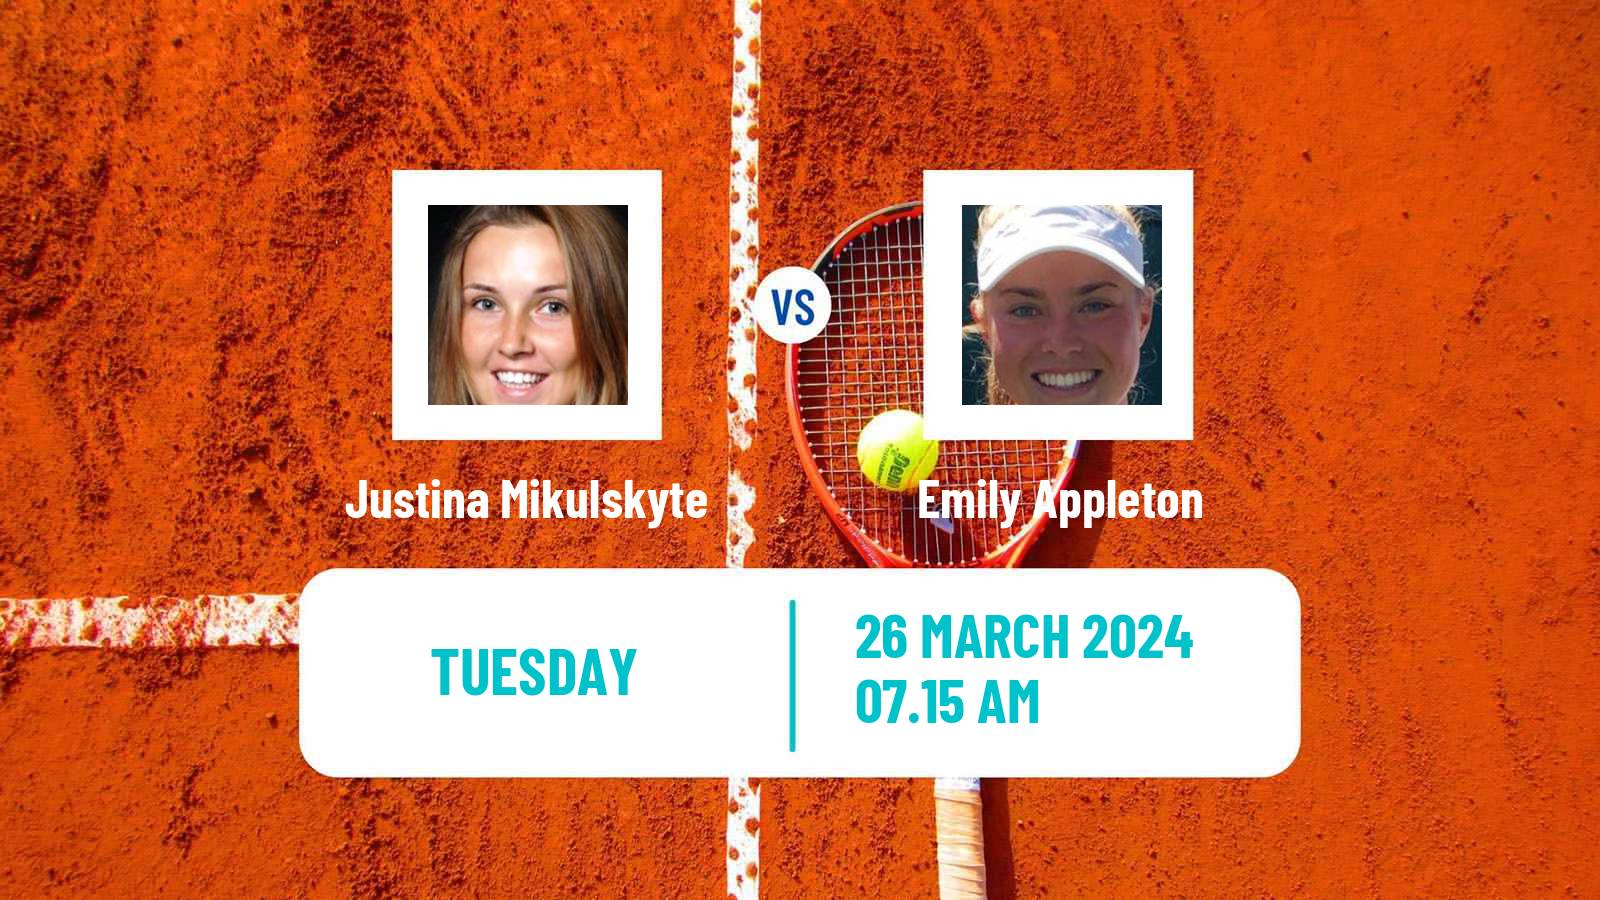 Tennis ITF W75 Croissy Beaubourg Women Justina Mikulskyte - Emily Appleton